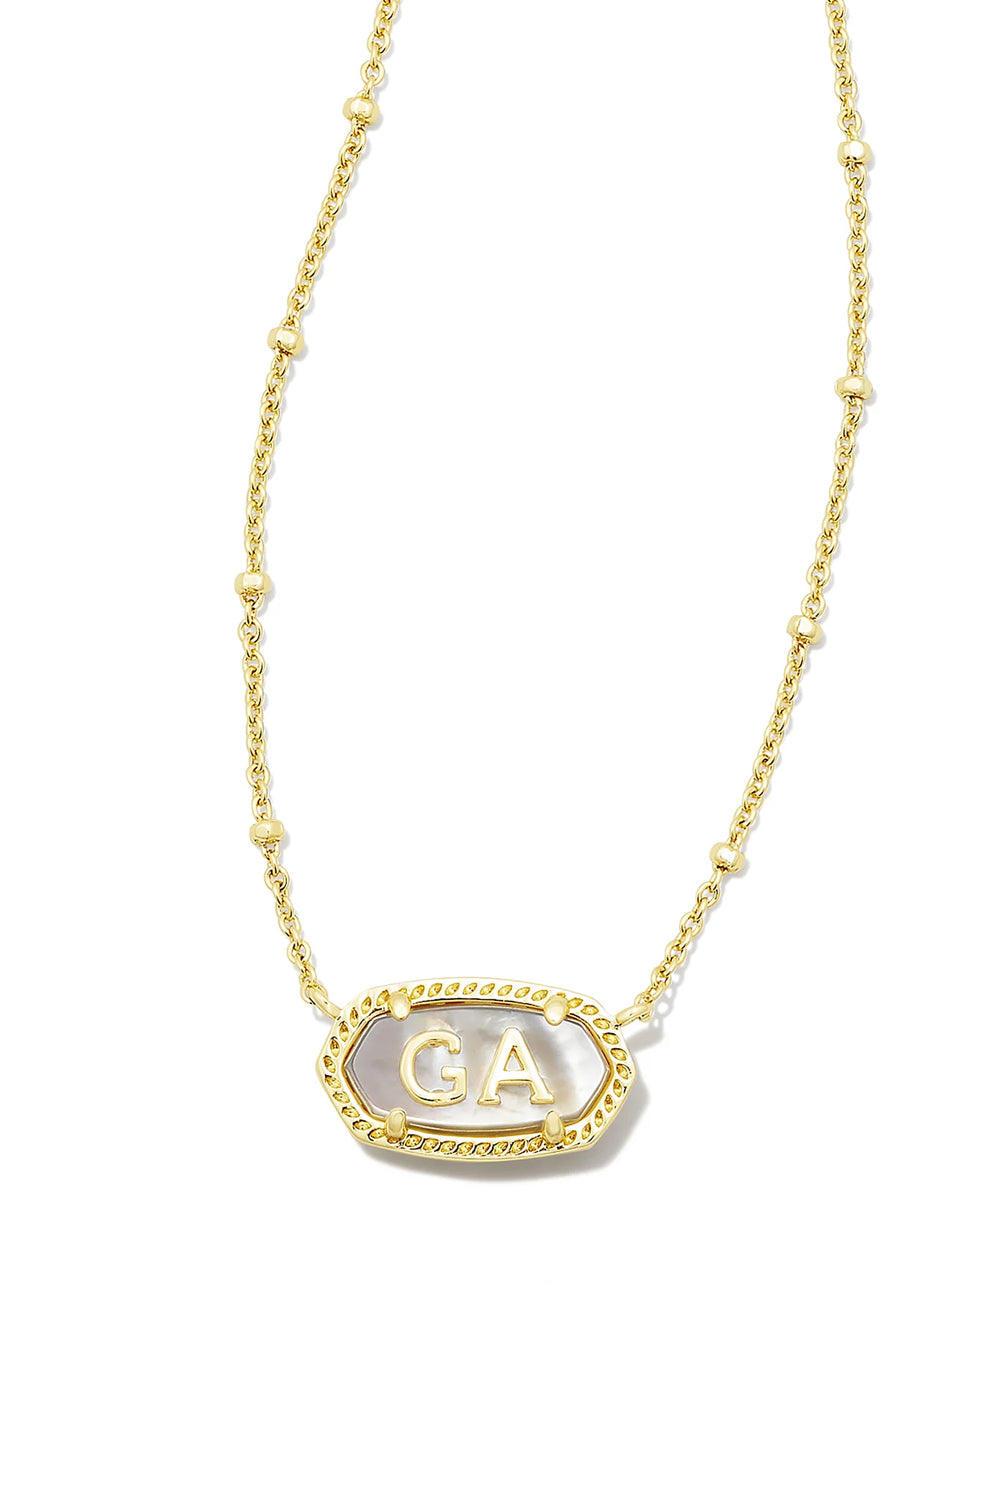 Kendra Scott: Elisa Georgia Gold Chain Necklace - Ivory MOP | Makk Fashions